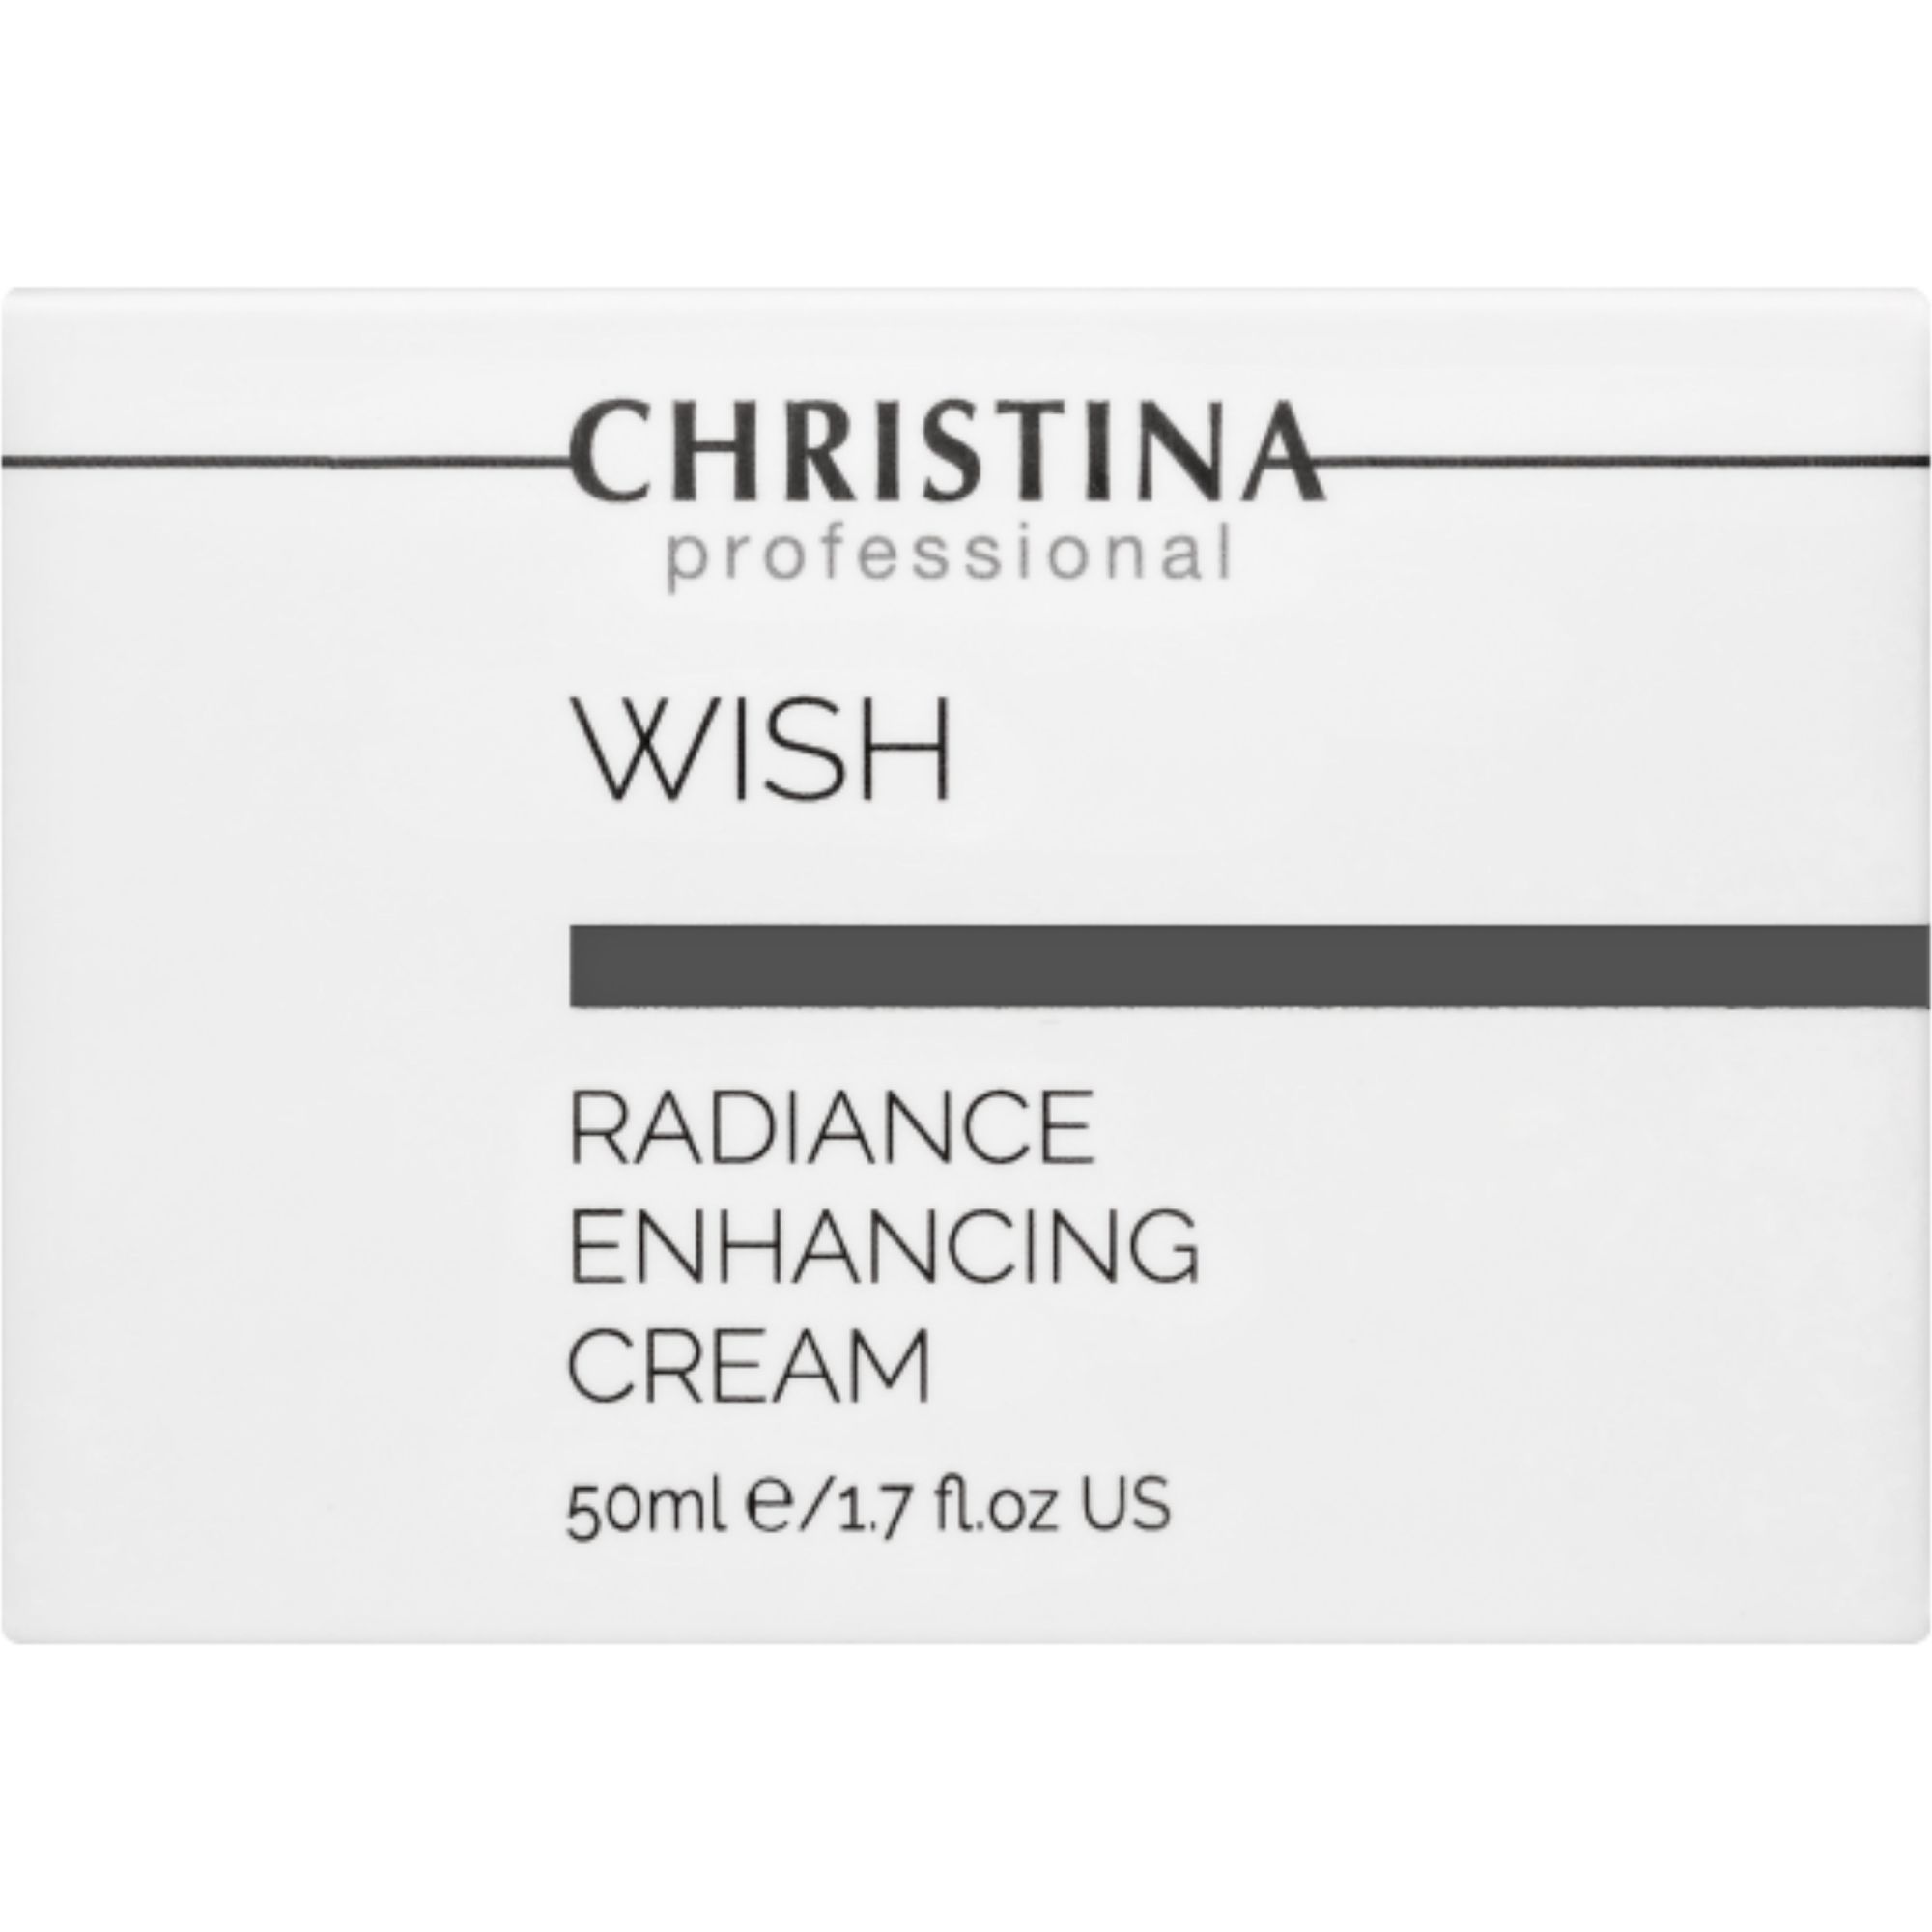 Омолаживающий крем Christina Wish Radiance Enhancing Cream 50 мл - фото 2